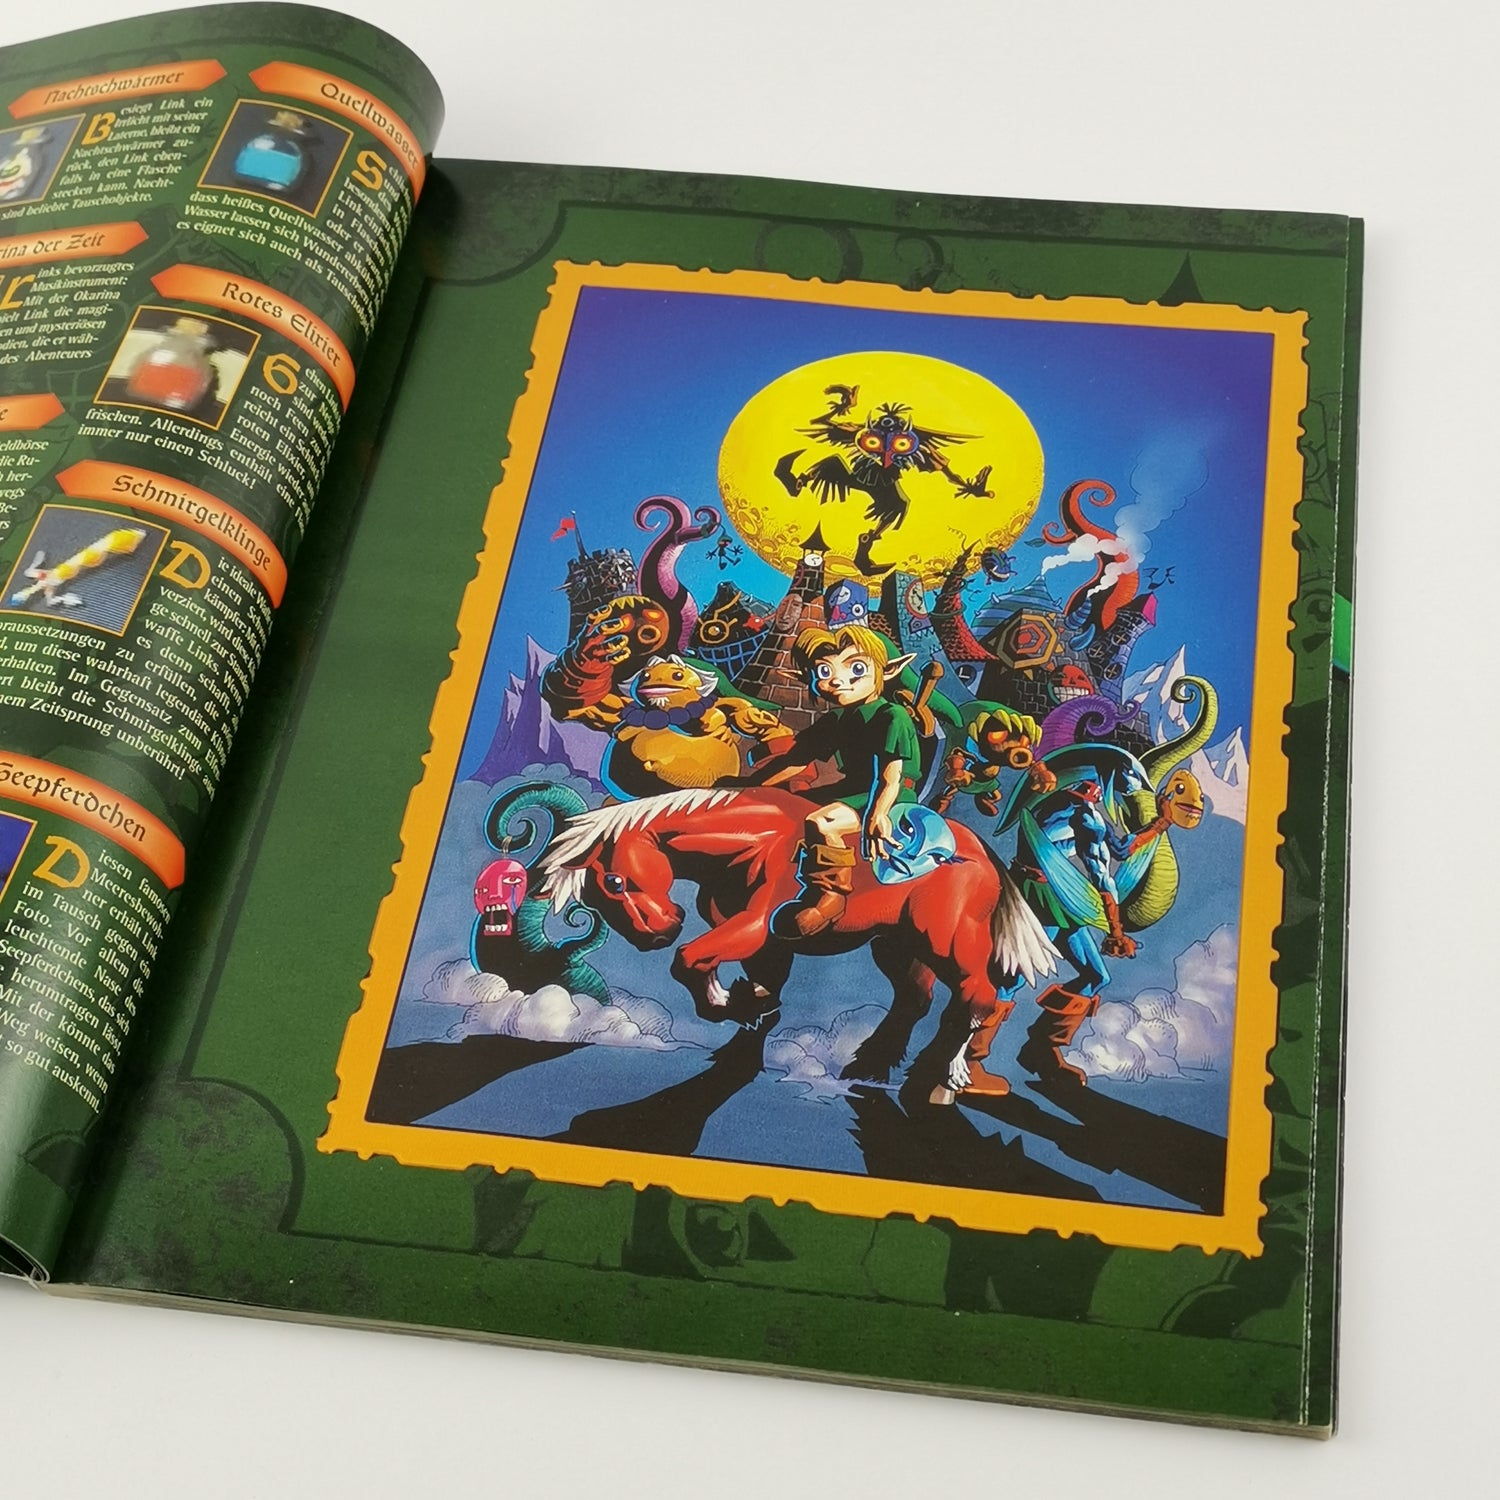 Nintendo 64 game: Zelda Majora's Mask + game advisor - original packaging instructions PAL N64